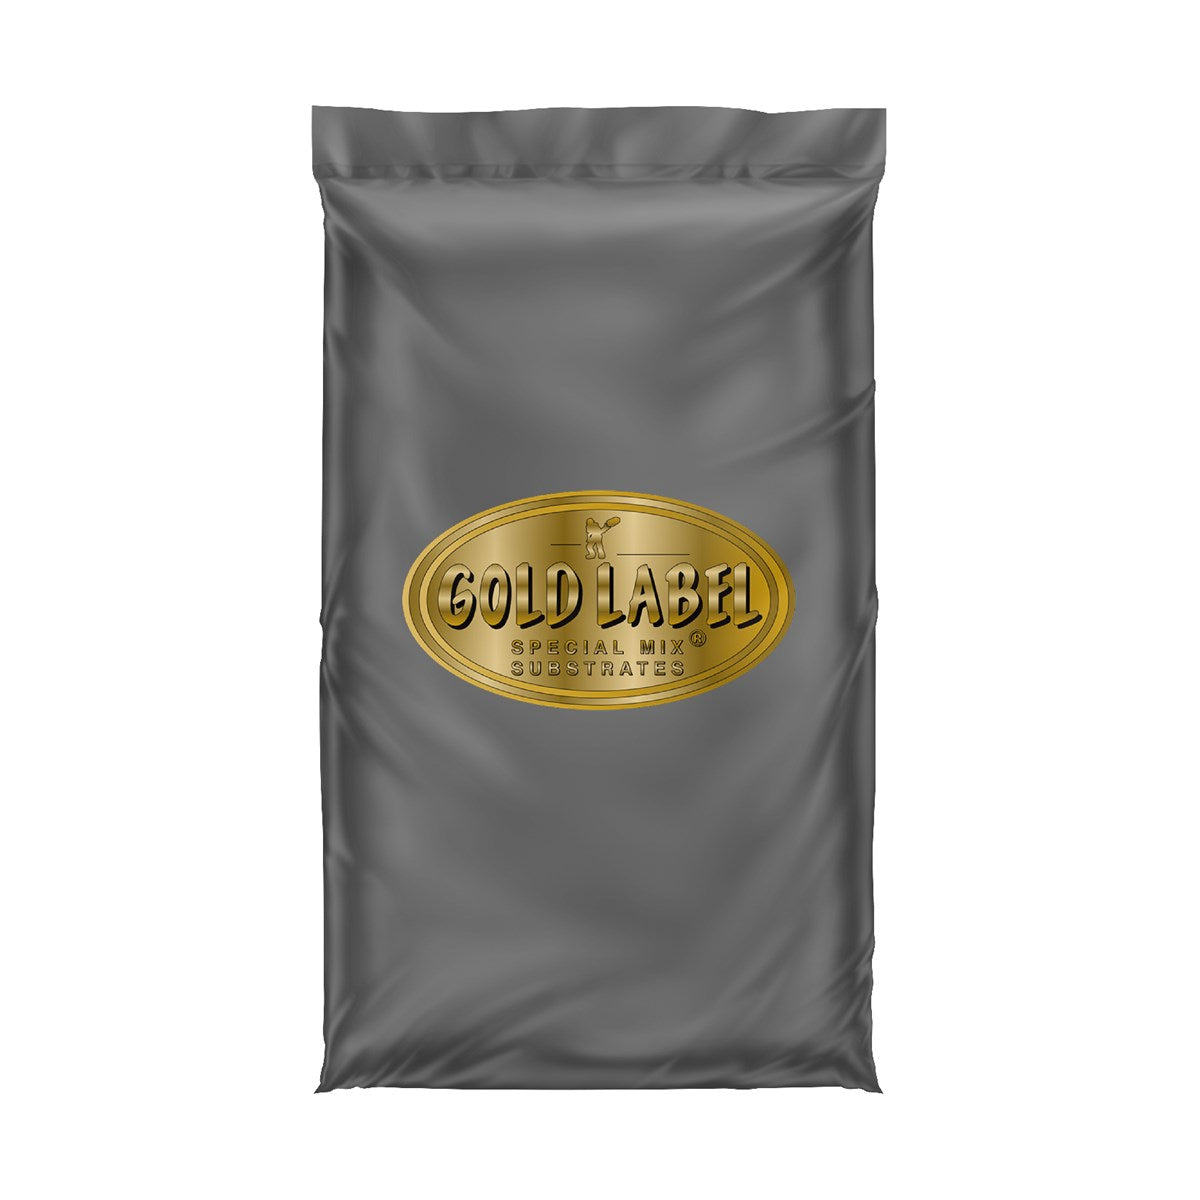 Gold Label Grey Bag 60/40 45L